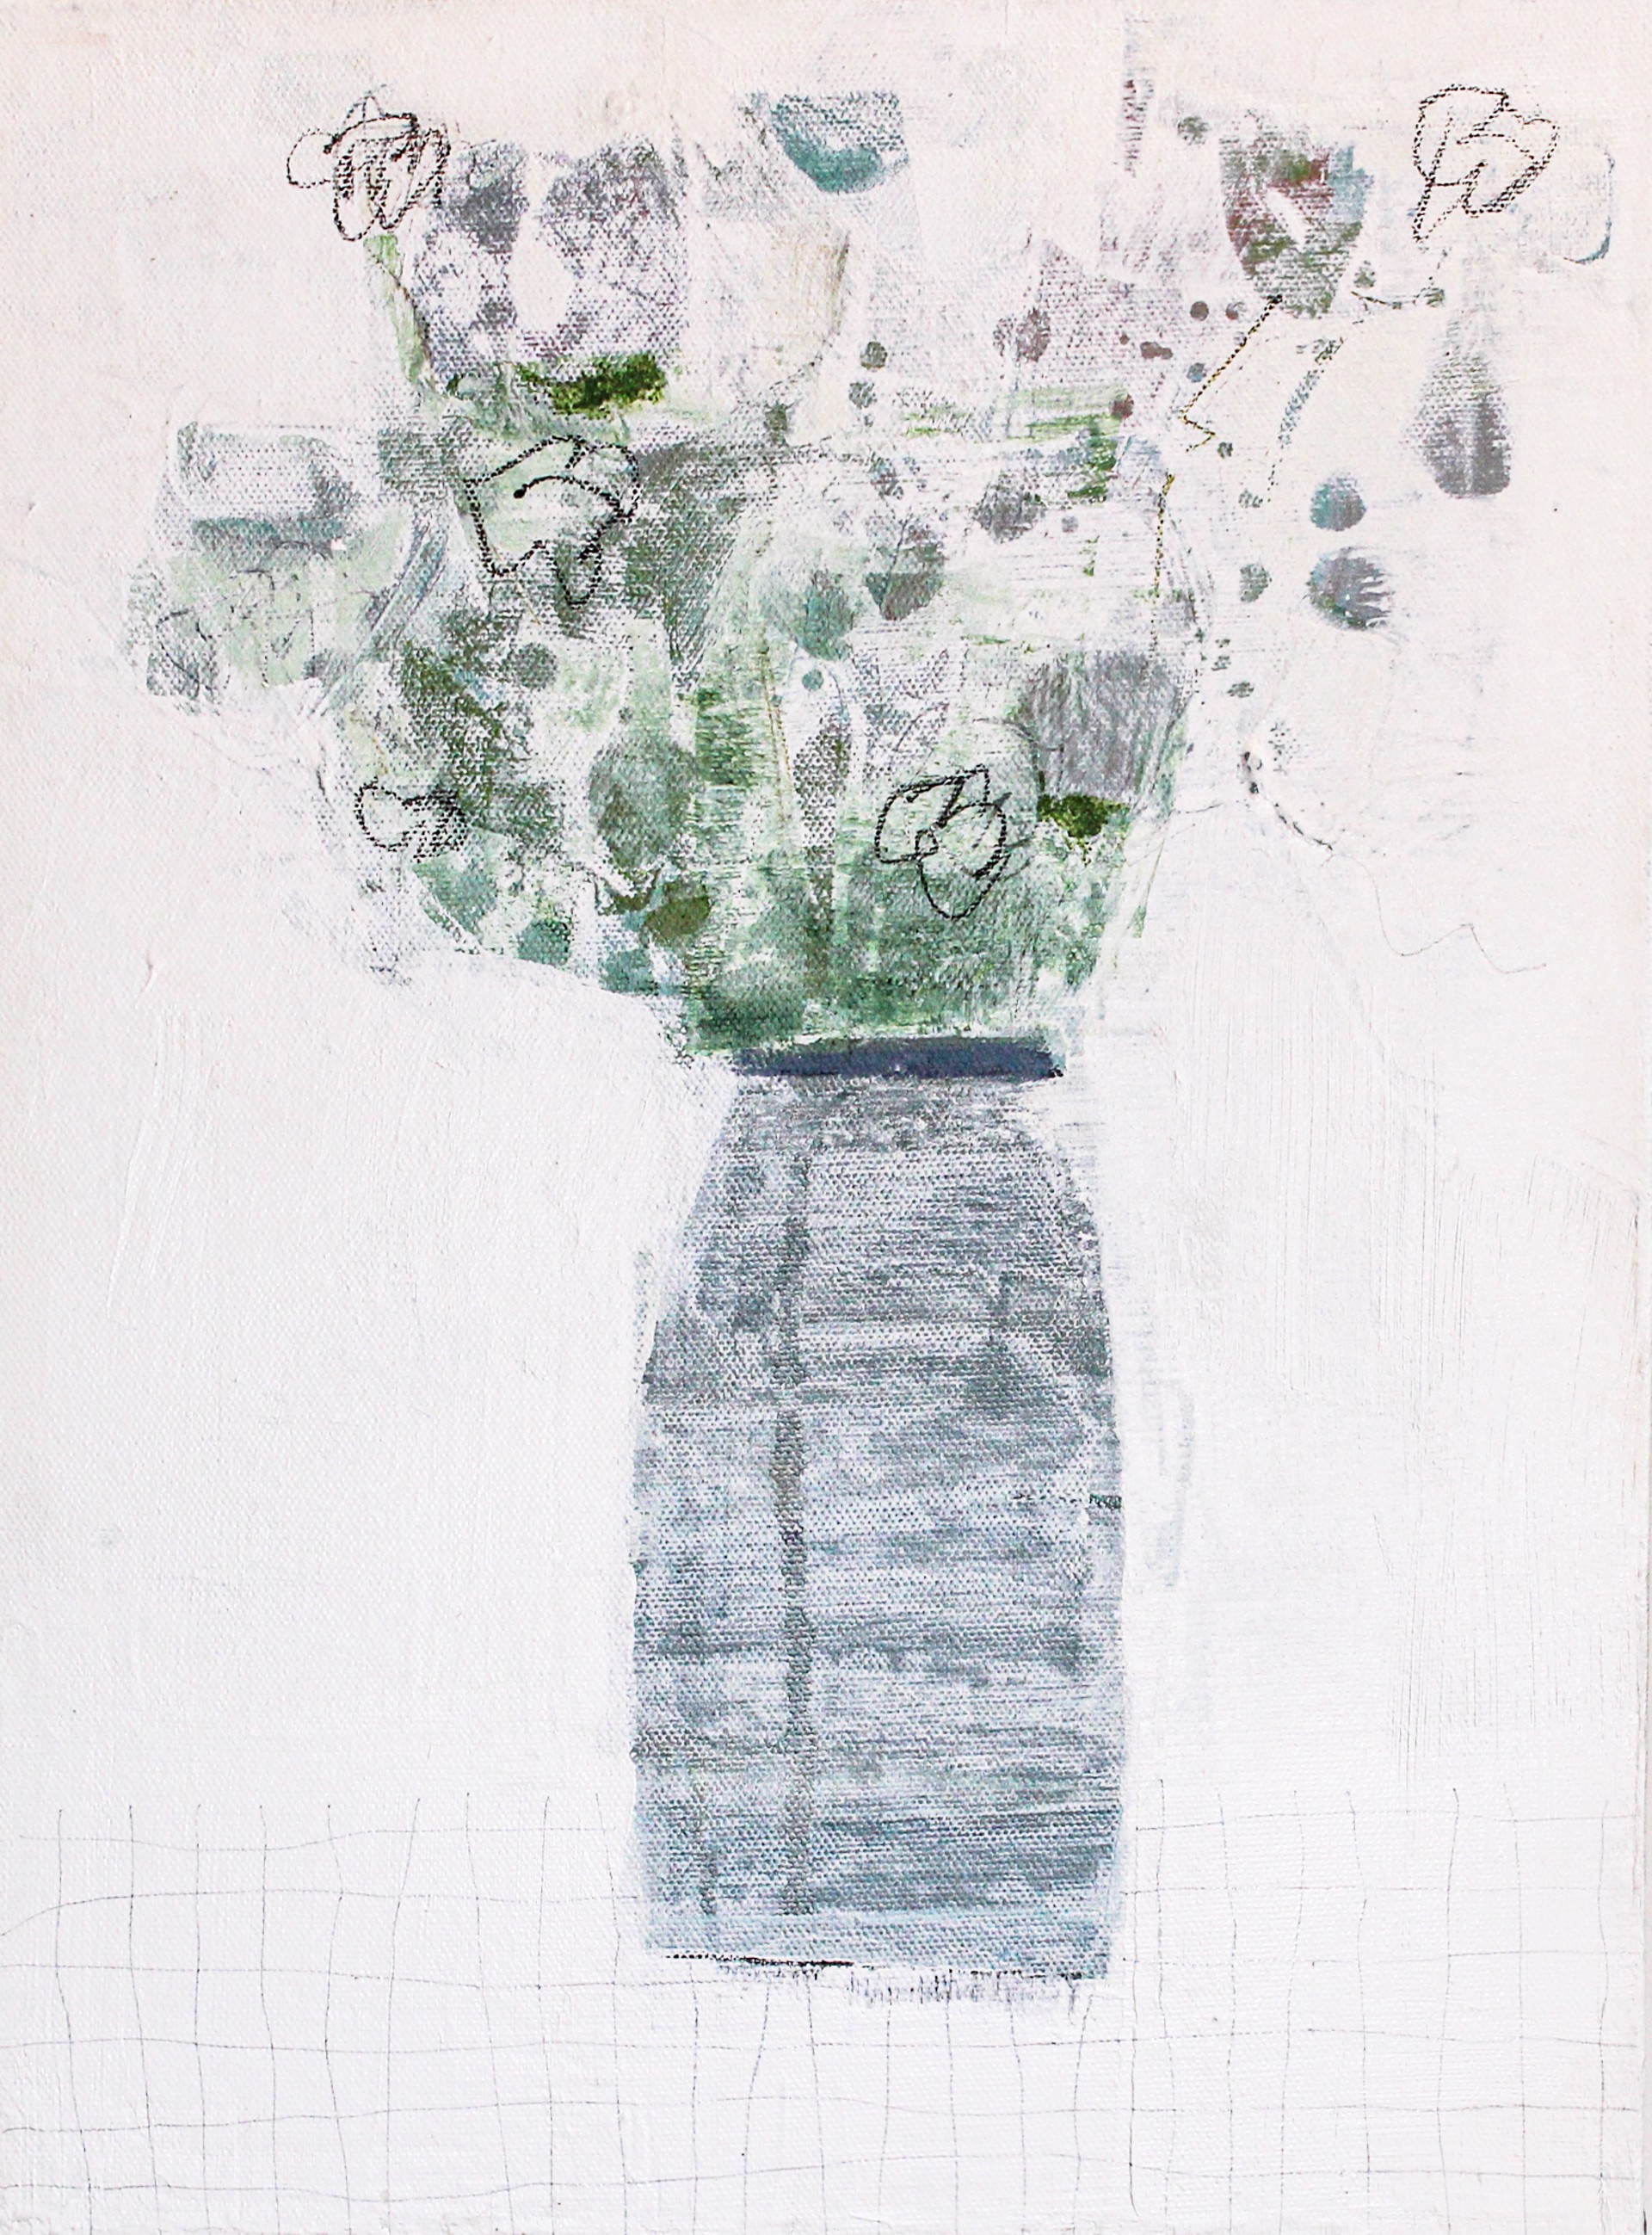 Vessel with Wildflowers on White by Ellen Rolli